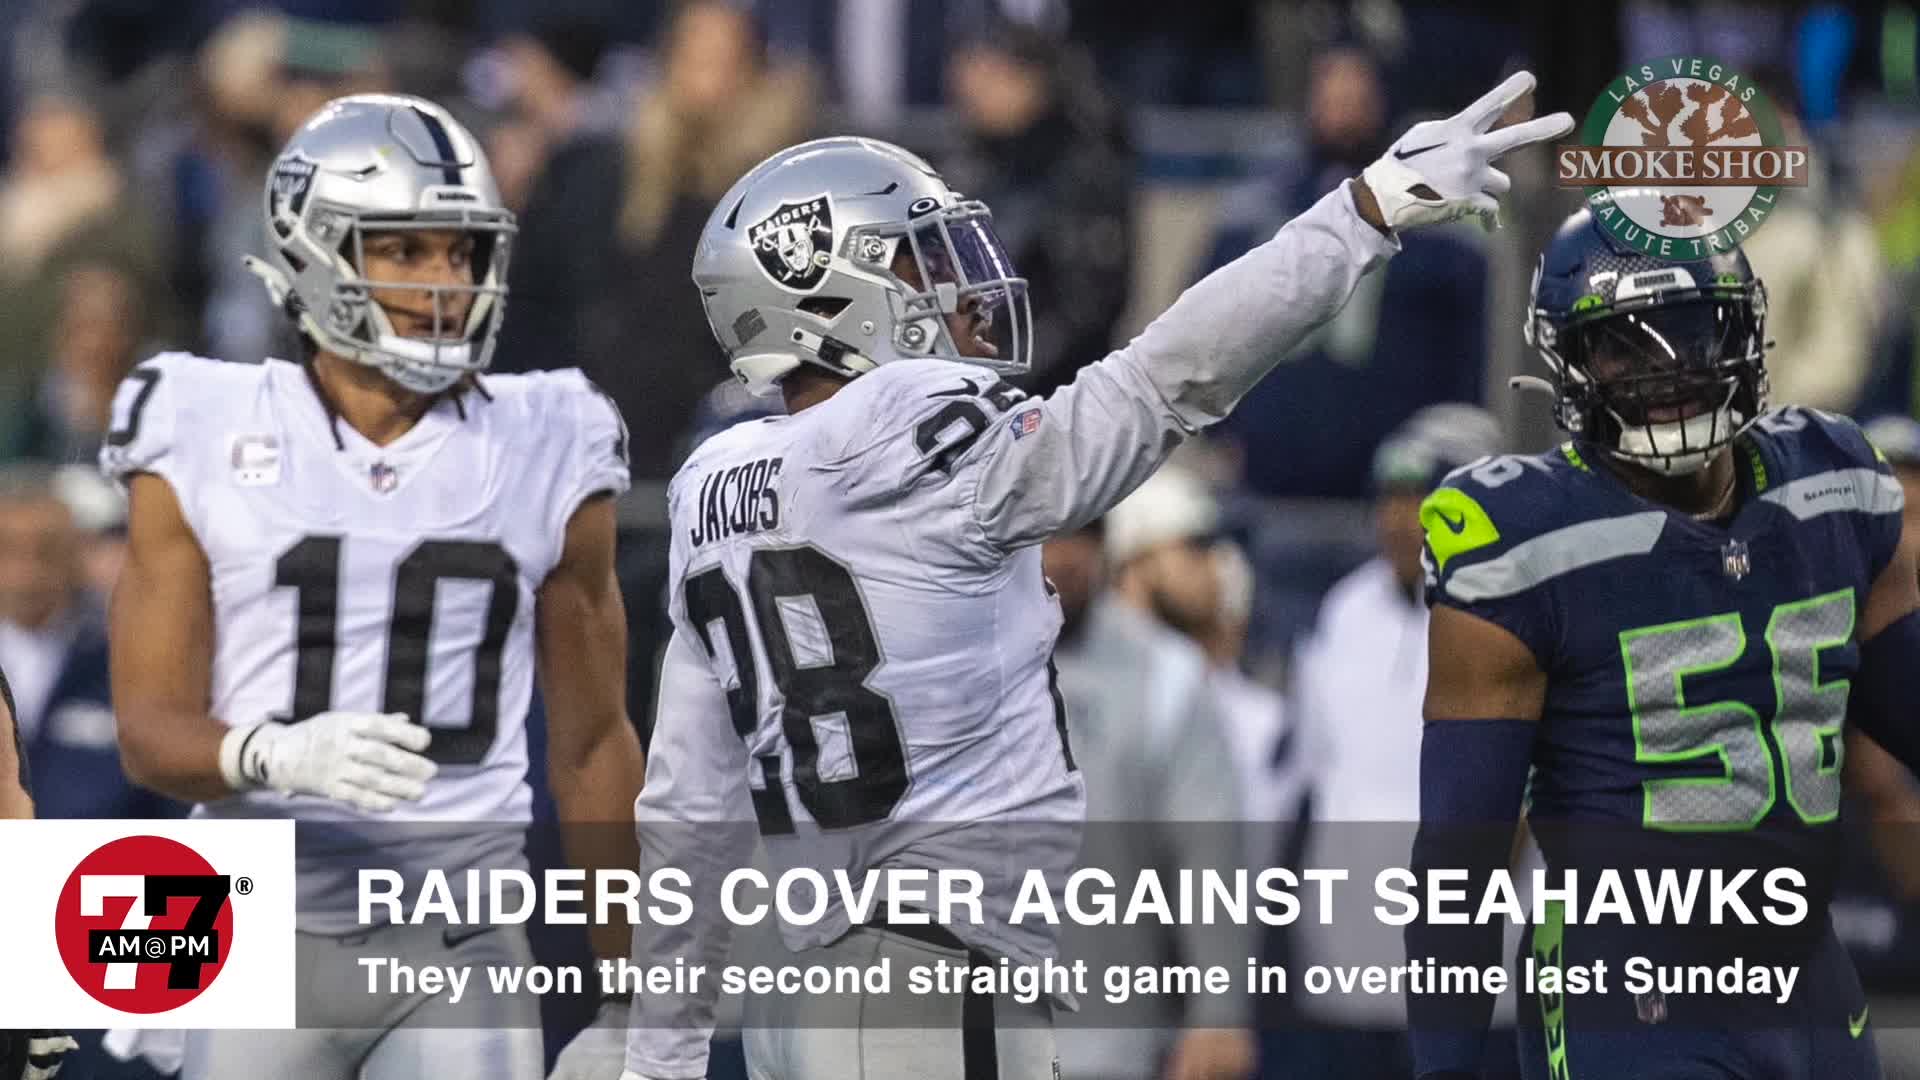 Raiders cover against Seahawks